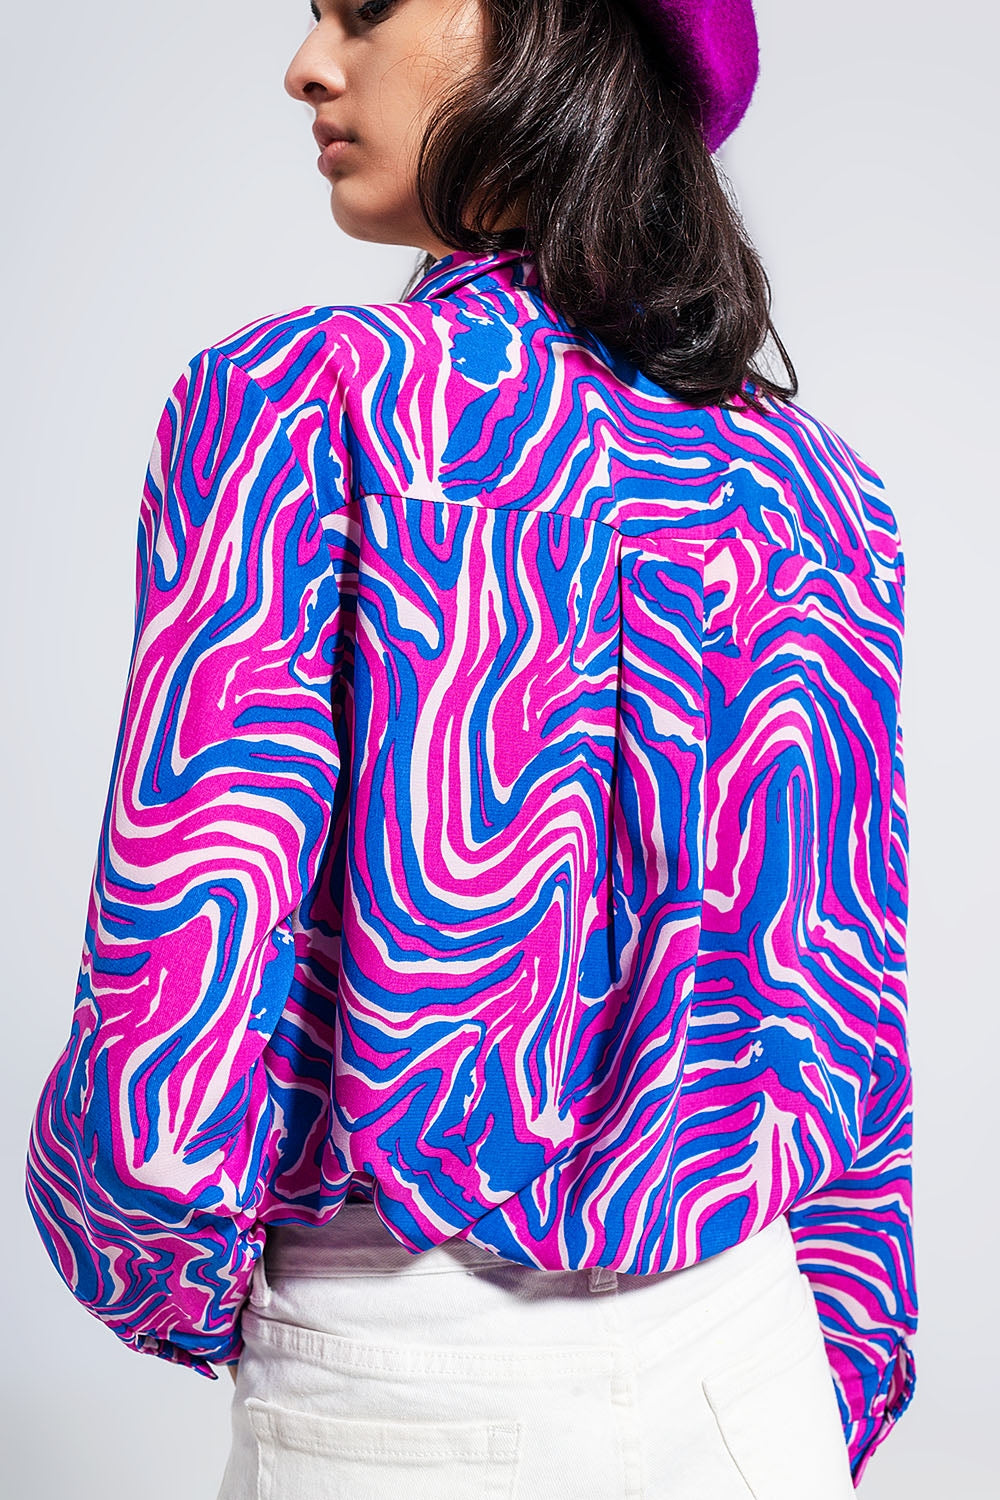 Fluid shirt in bright abstract purple Szua Store